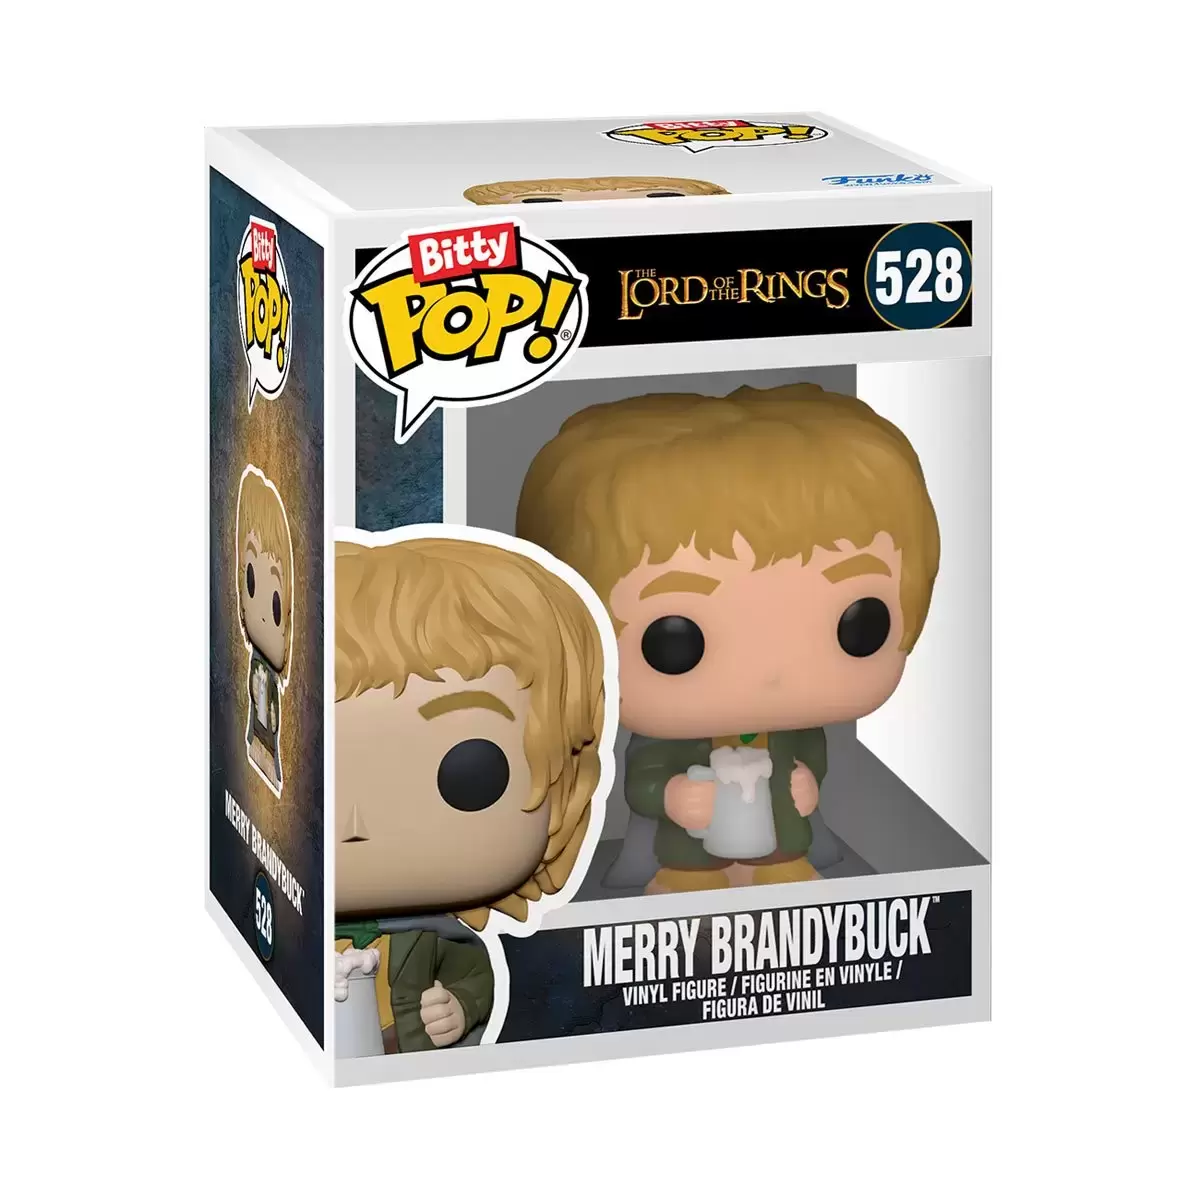 Bitty POP! - Lord of The Rings - Merry Brandibuck